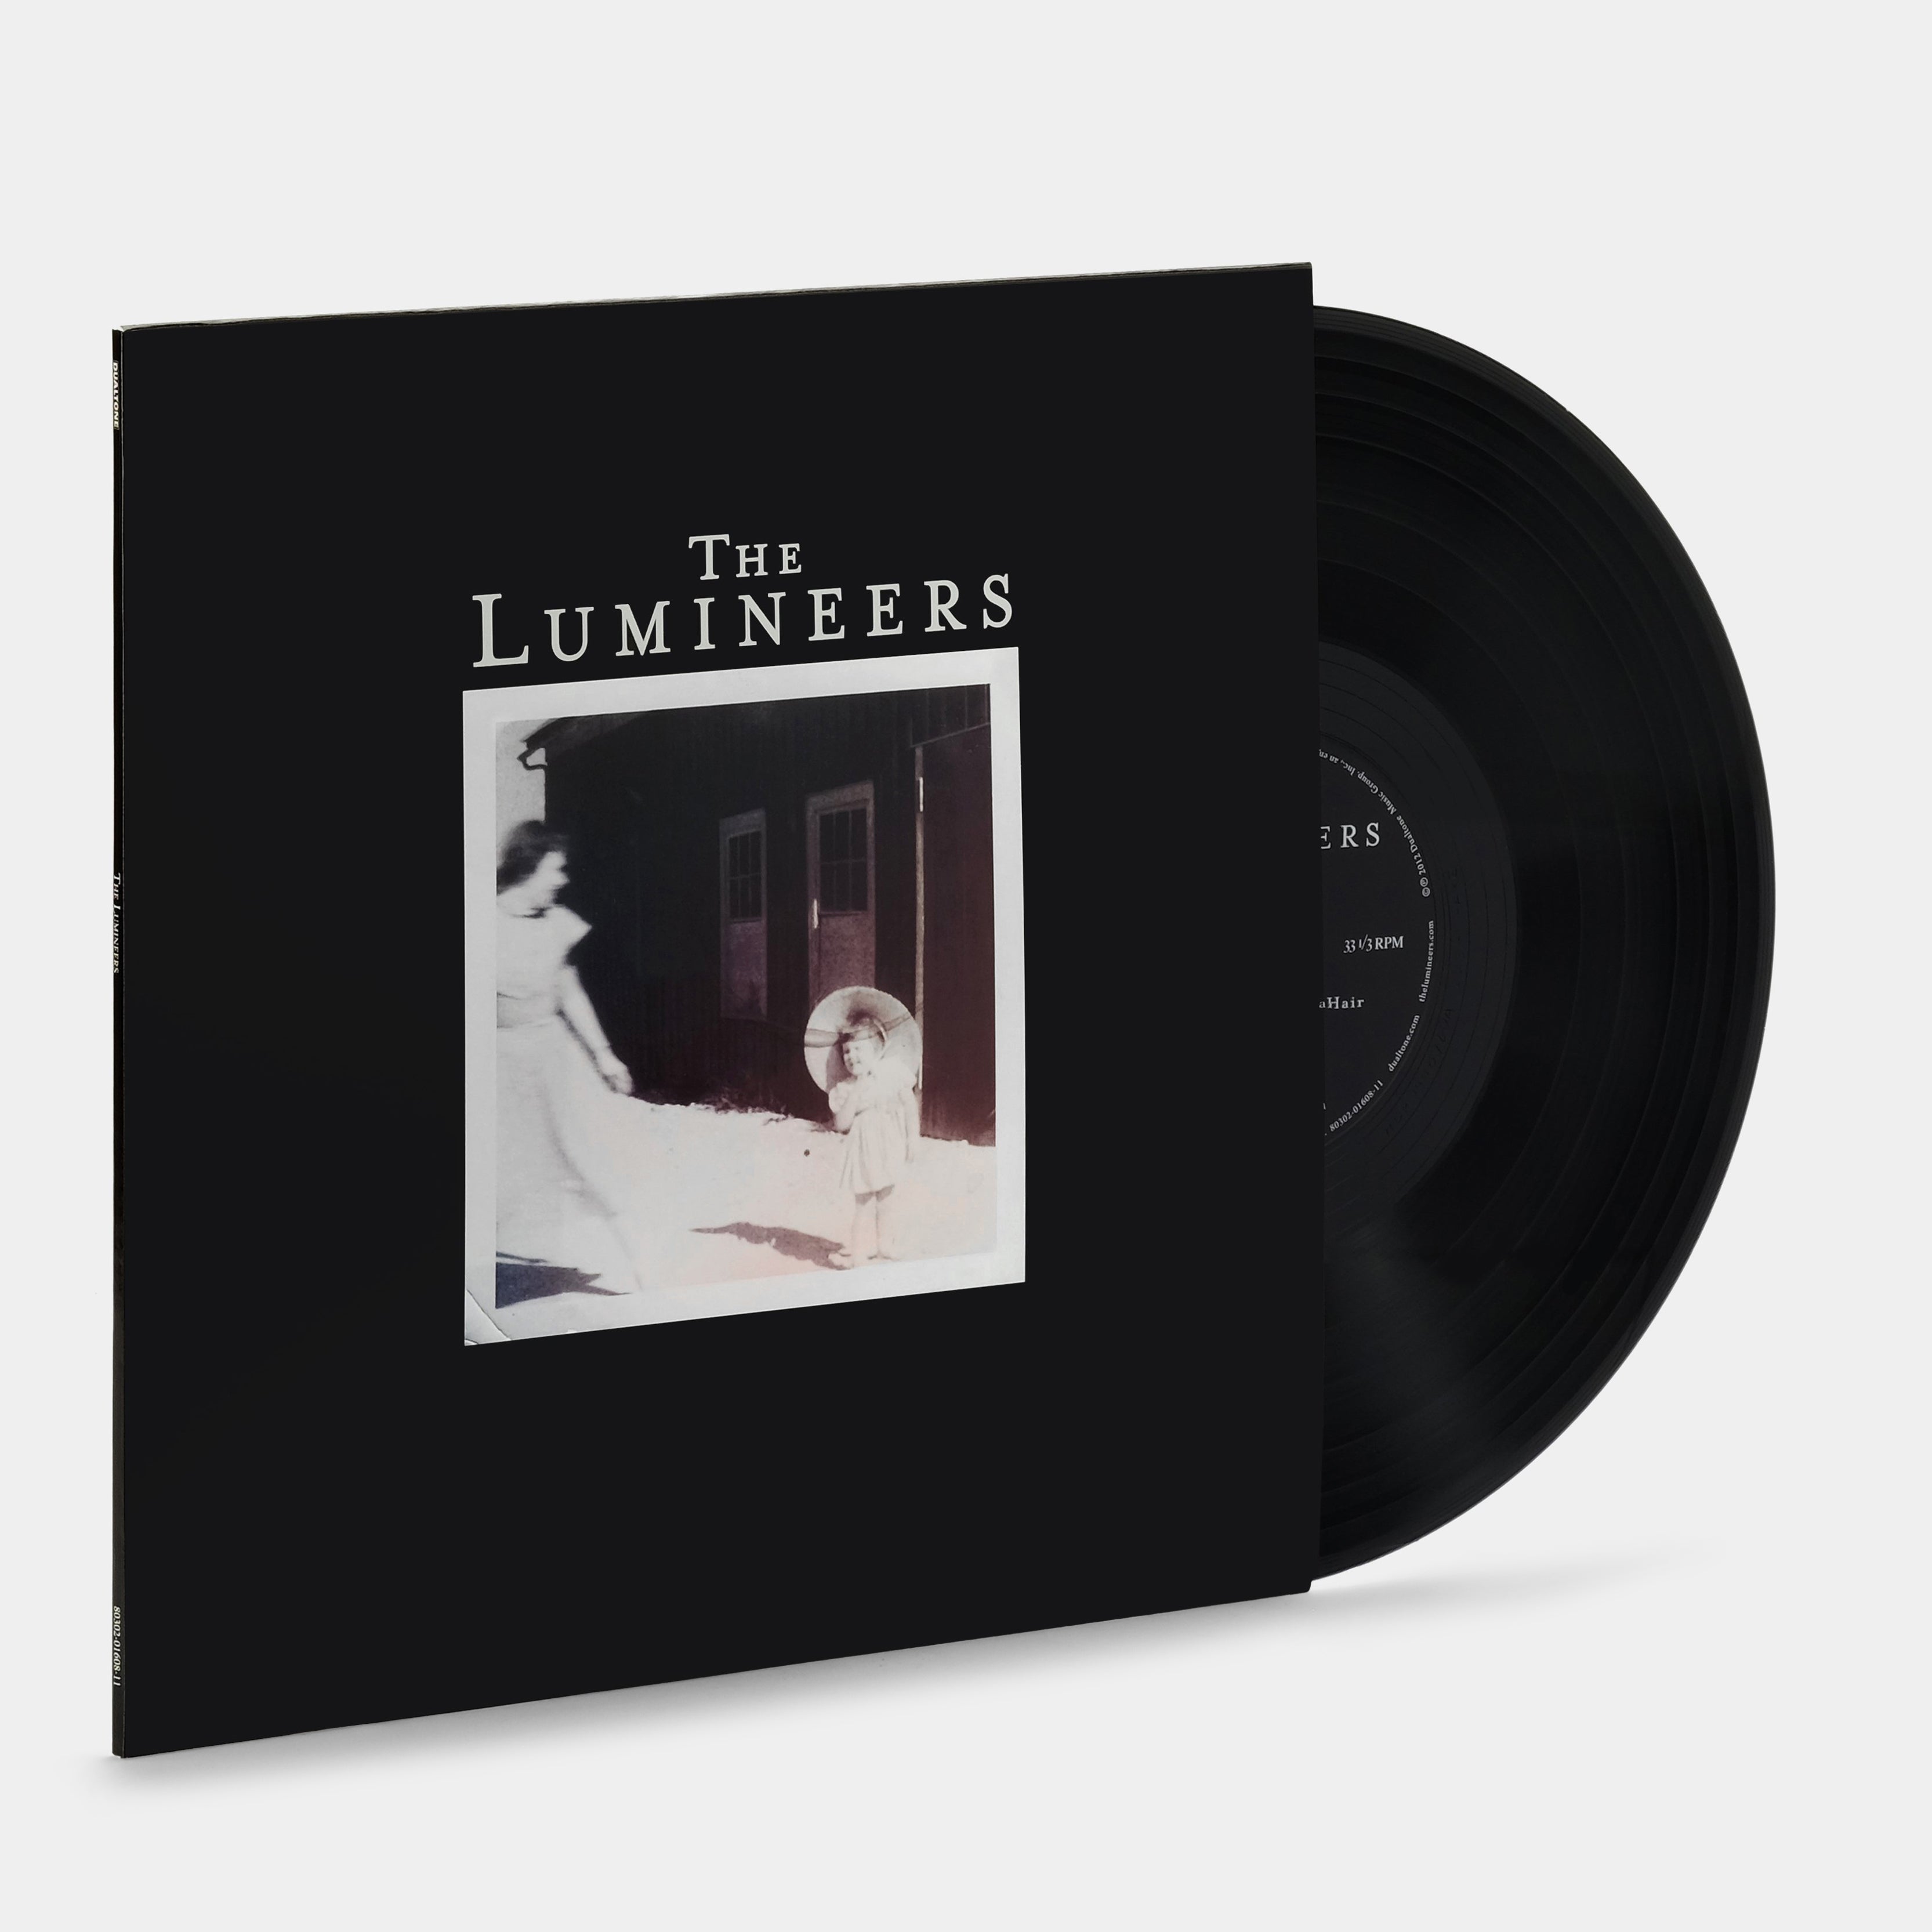 The Lumineers - The Lumineers LP Vinyl Record